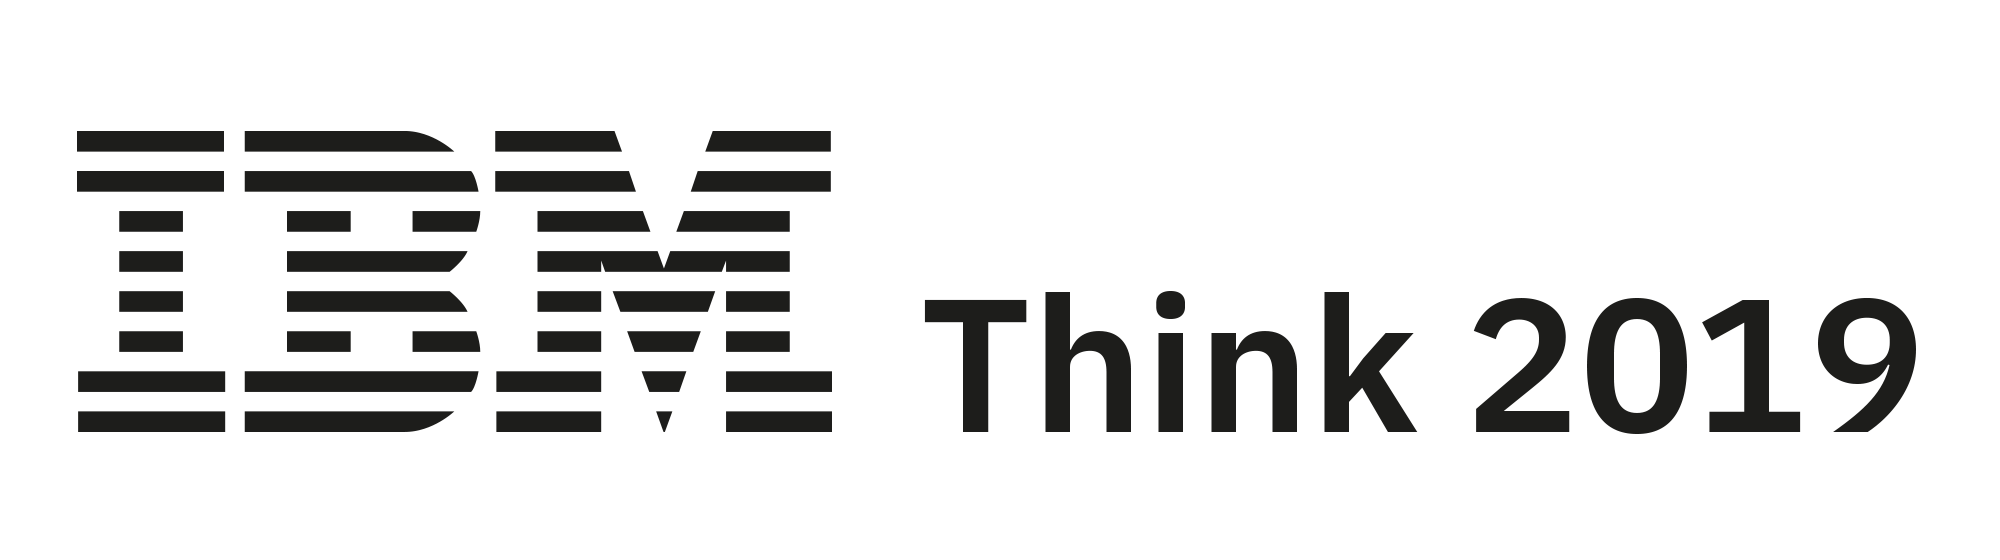 IBM Think Logo - IBM Think 2019